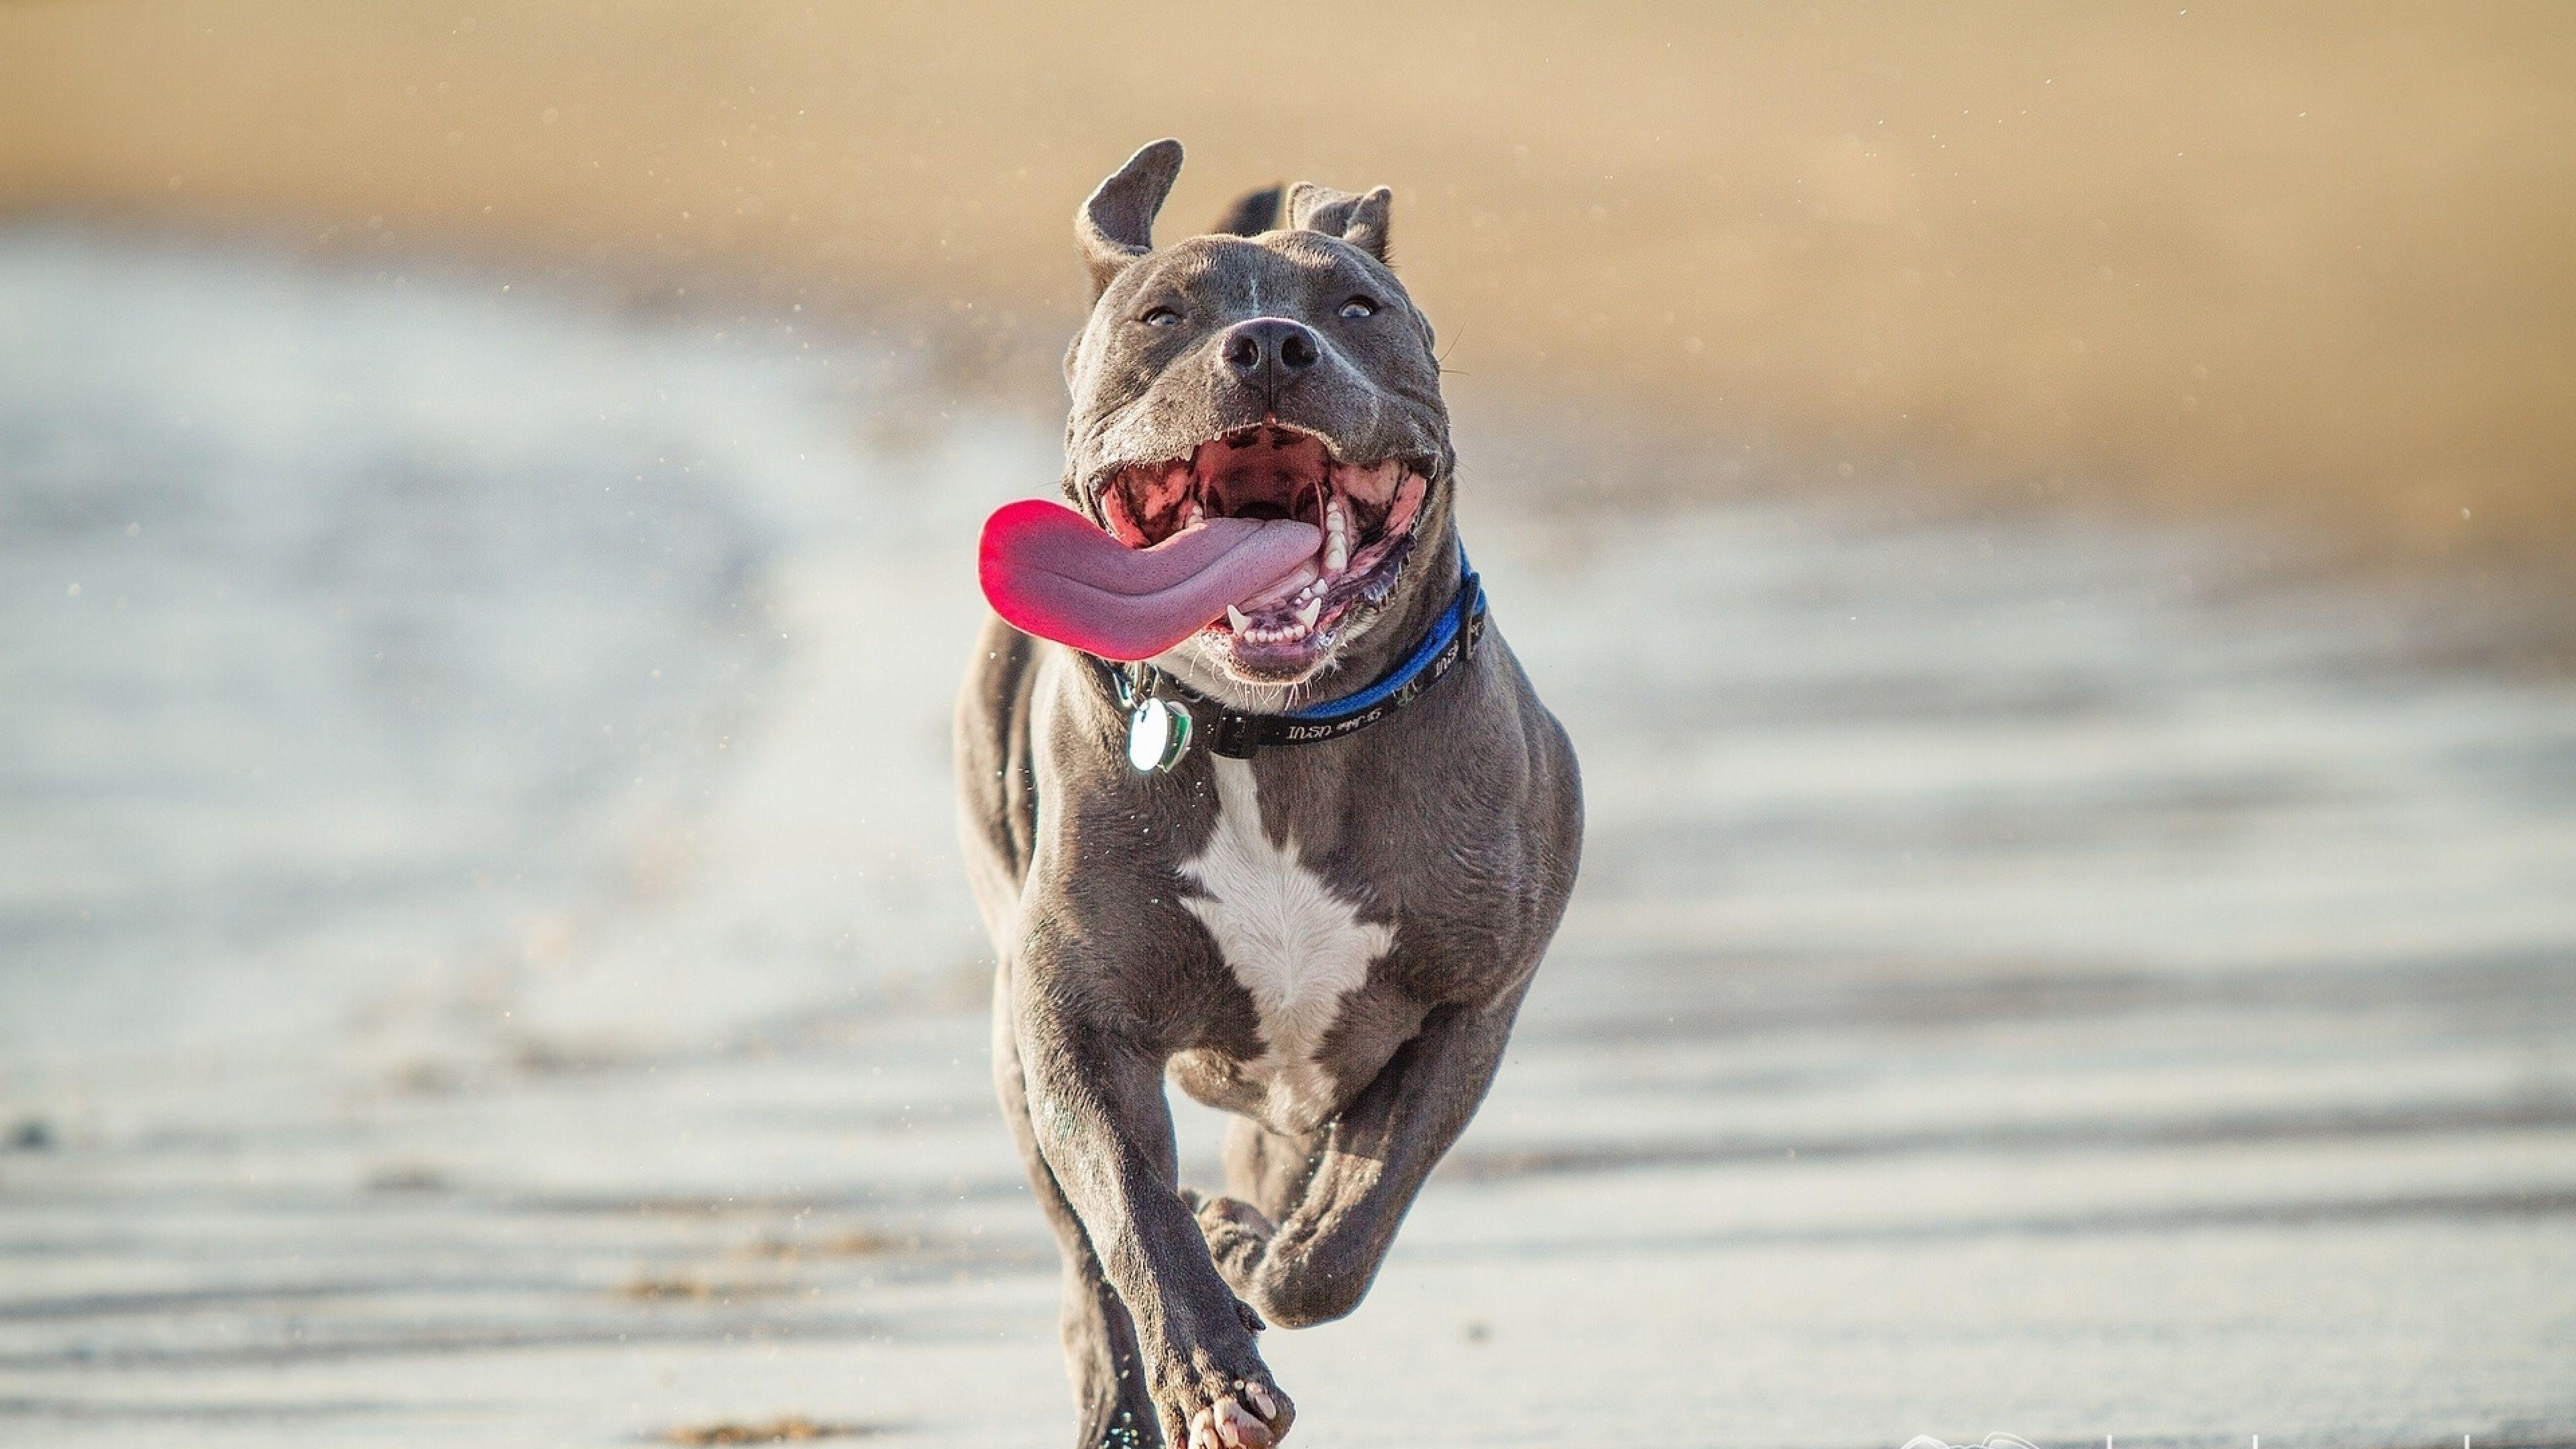 Download Wallpaper 3840x2160 Pit bull terrier, Run, Protruding